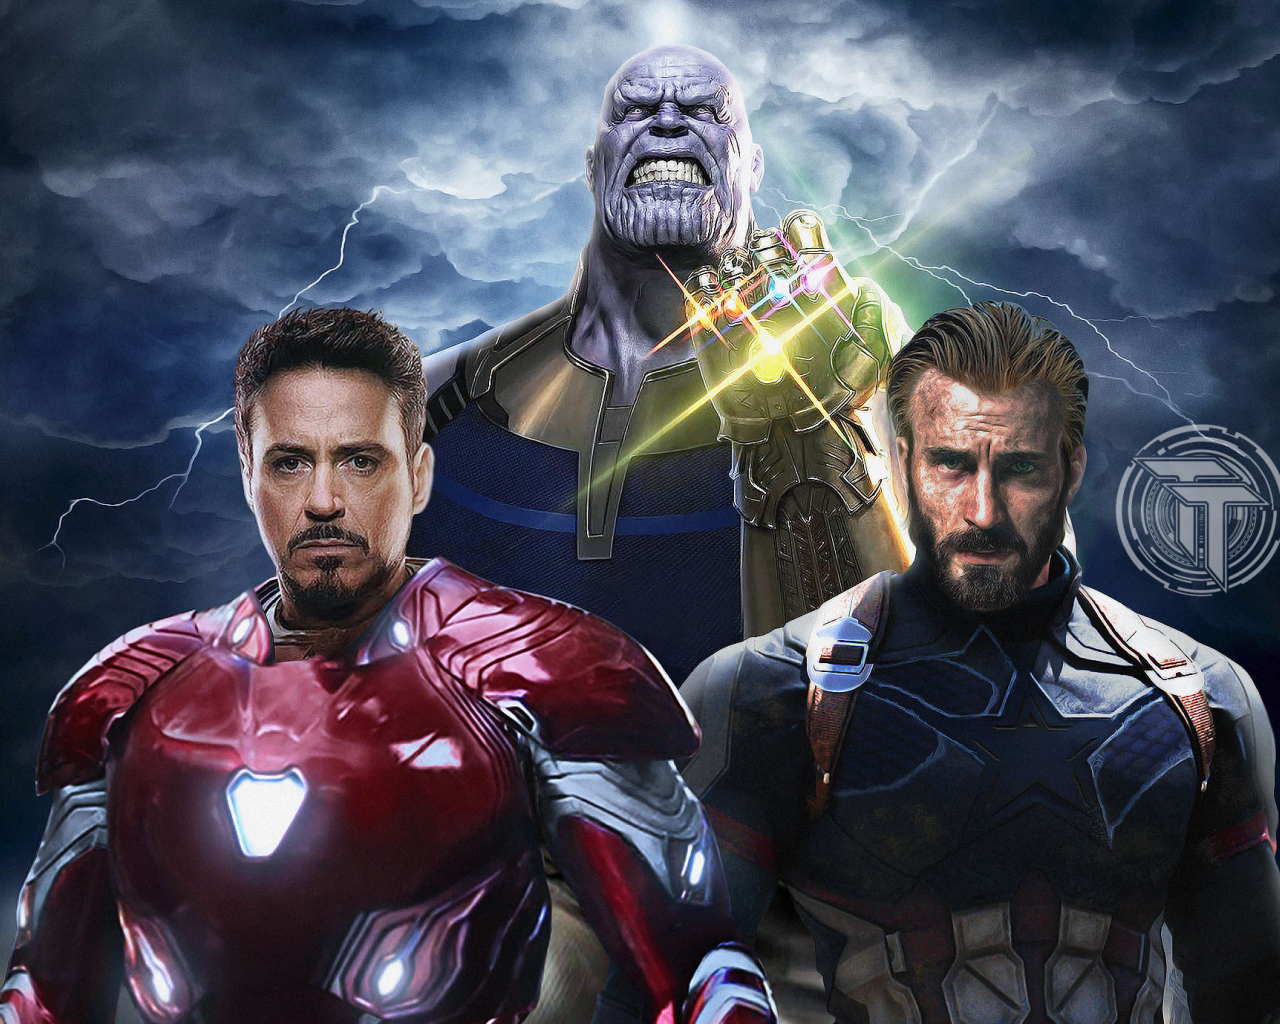 Download 1280x1024 Wallpaper Avengers: Infinity War, Captain America, Iron  Man, Thanos, Standard 5:4, Fullscreen, 1280x1024 Hd Image, Background, 27886